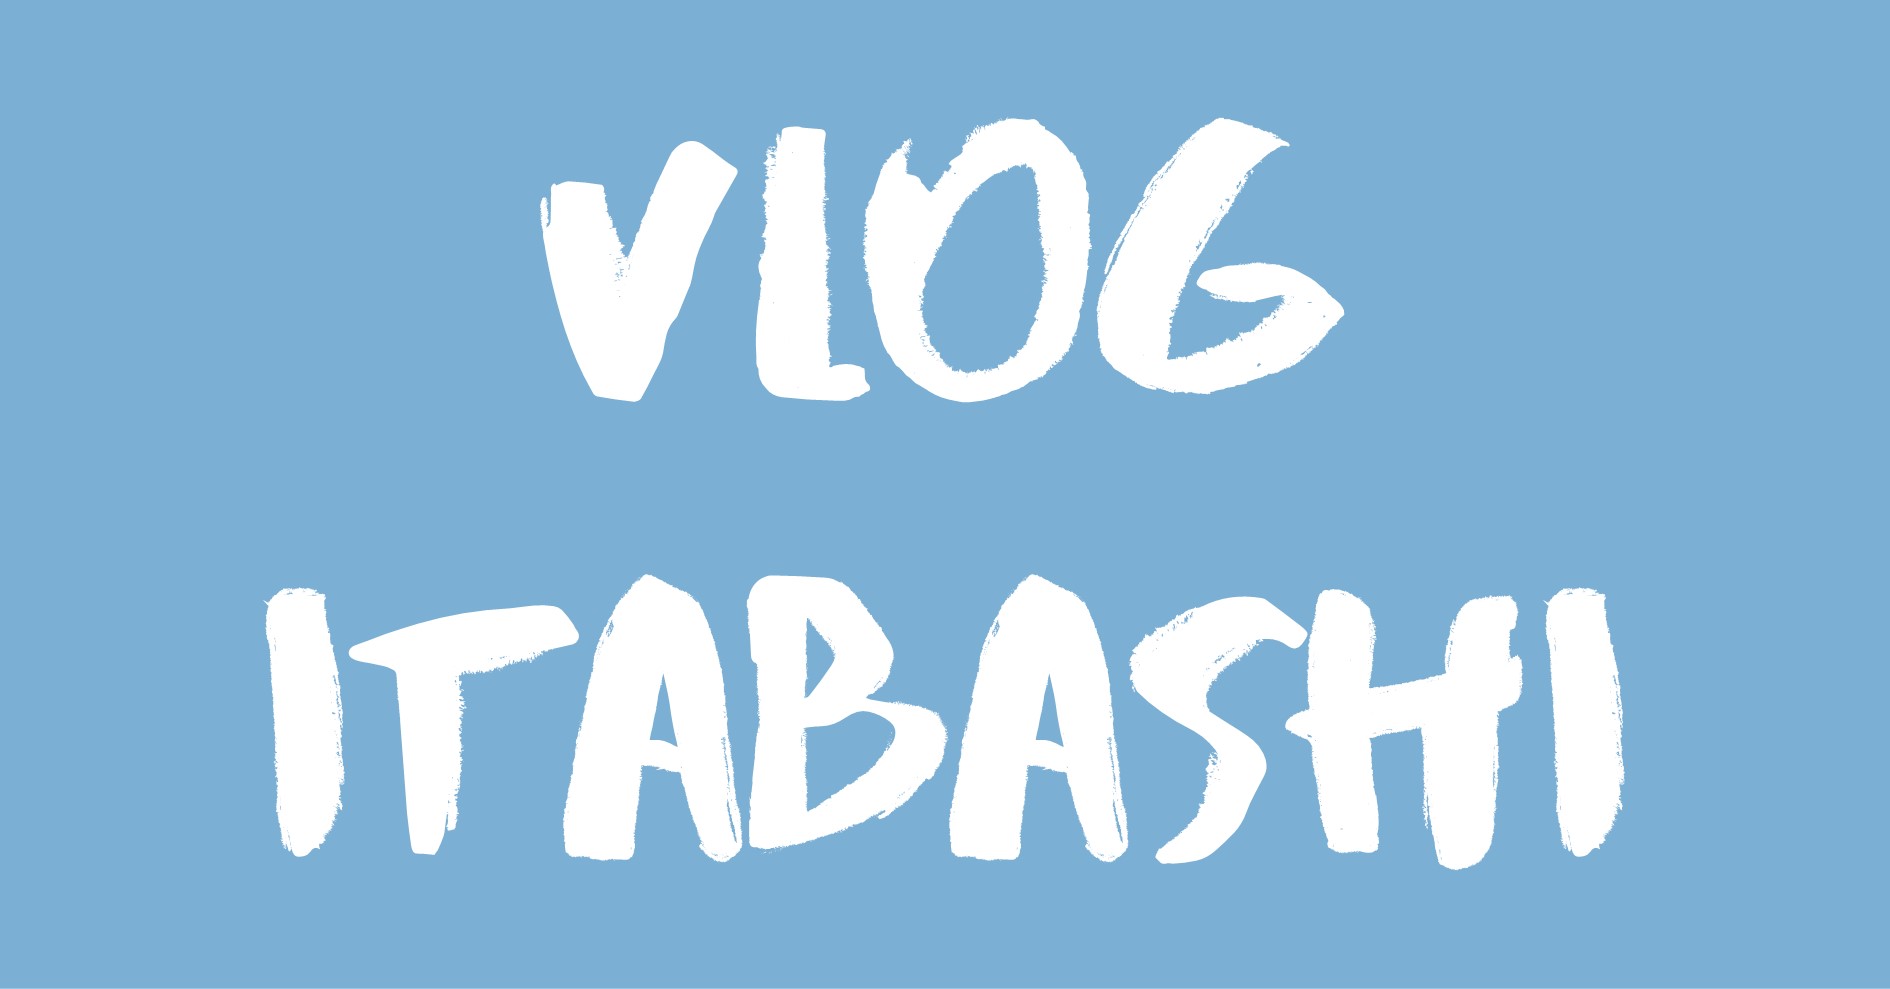 Vlog Itabashi